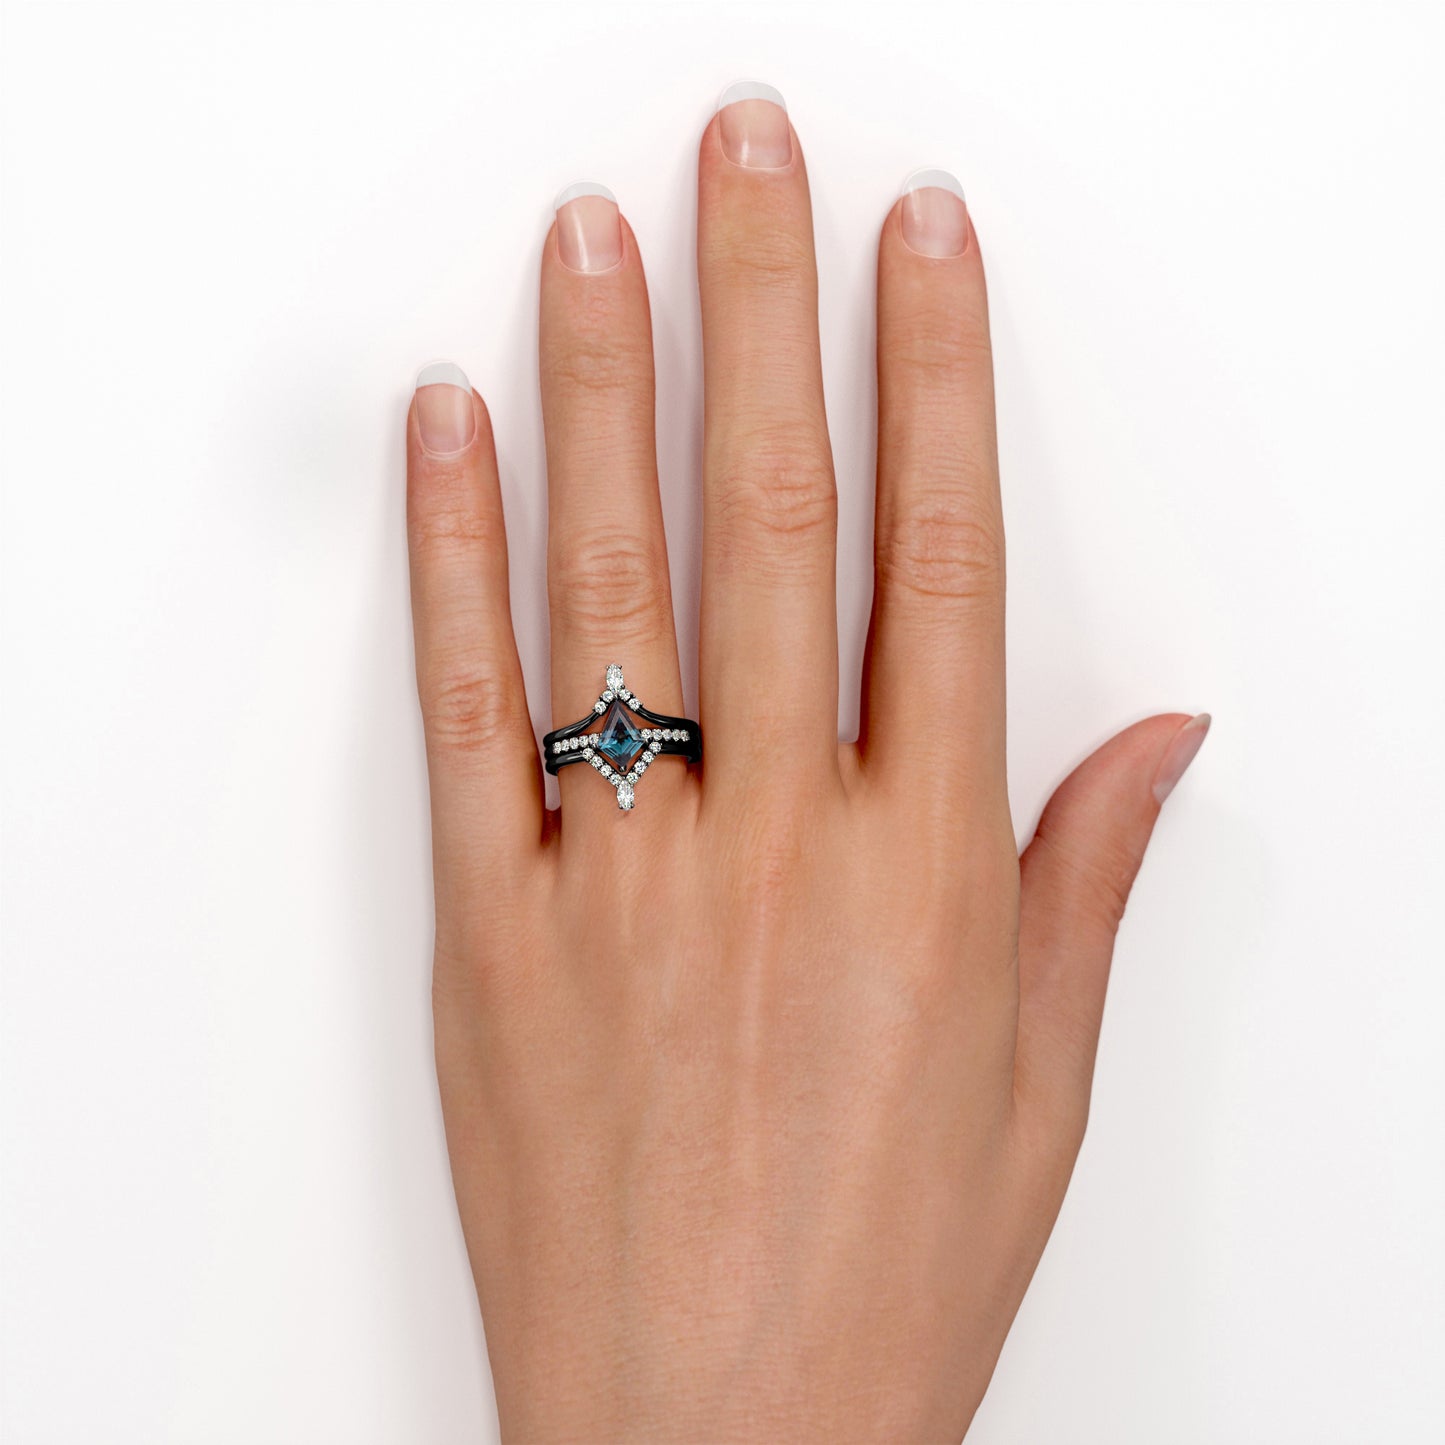 Tiara Chevron 1.35 carat Kite shaped Lab created Alexandrite and diamond trio wedding ring set in White gold